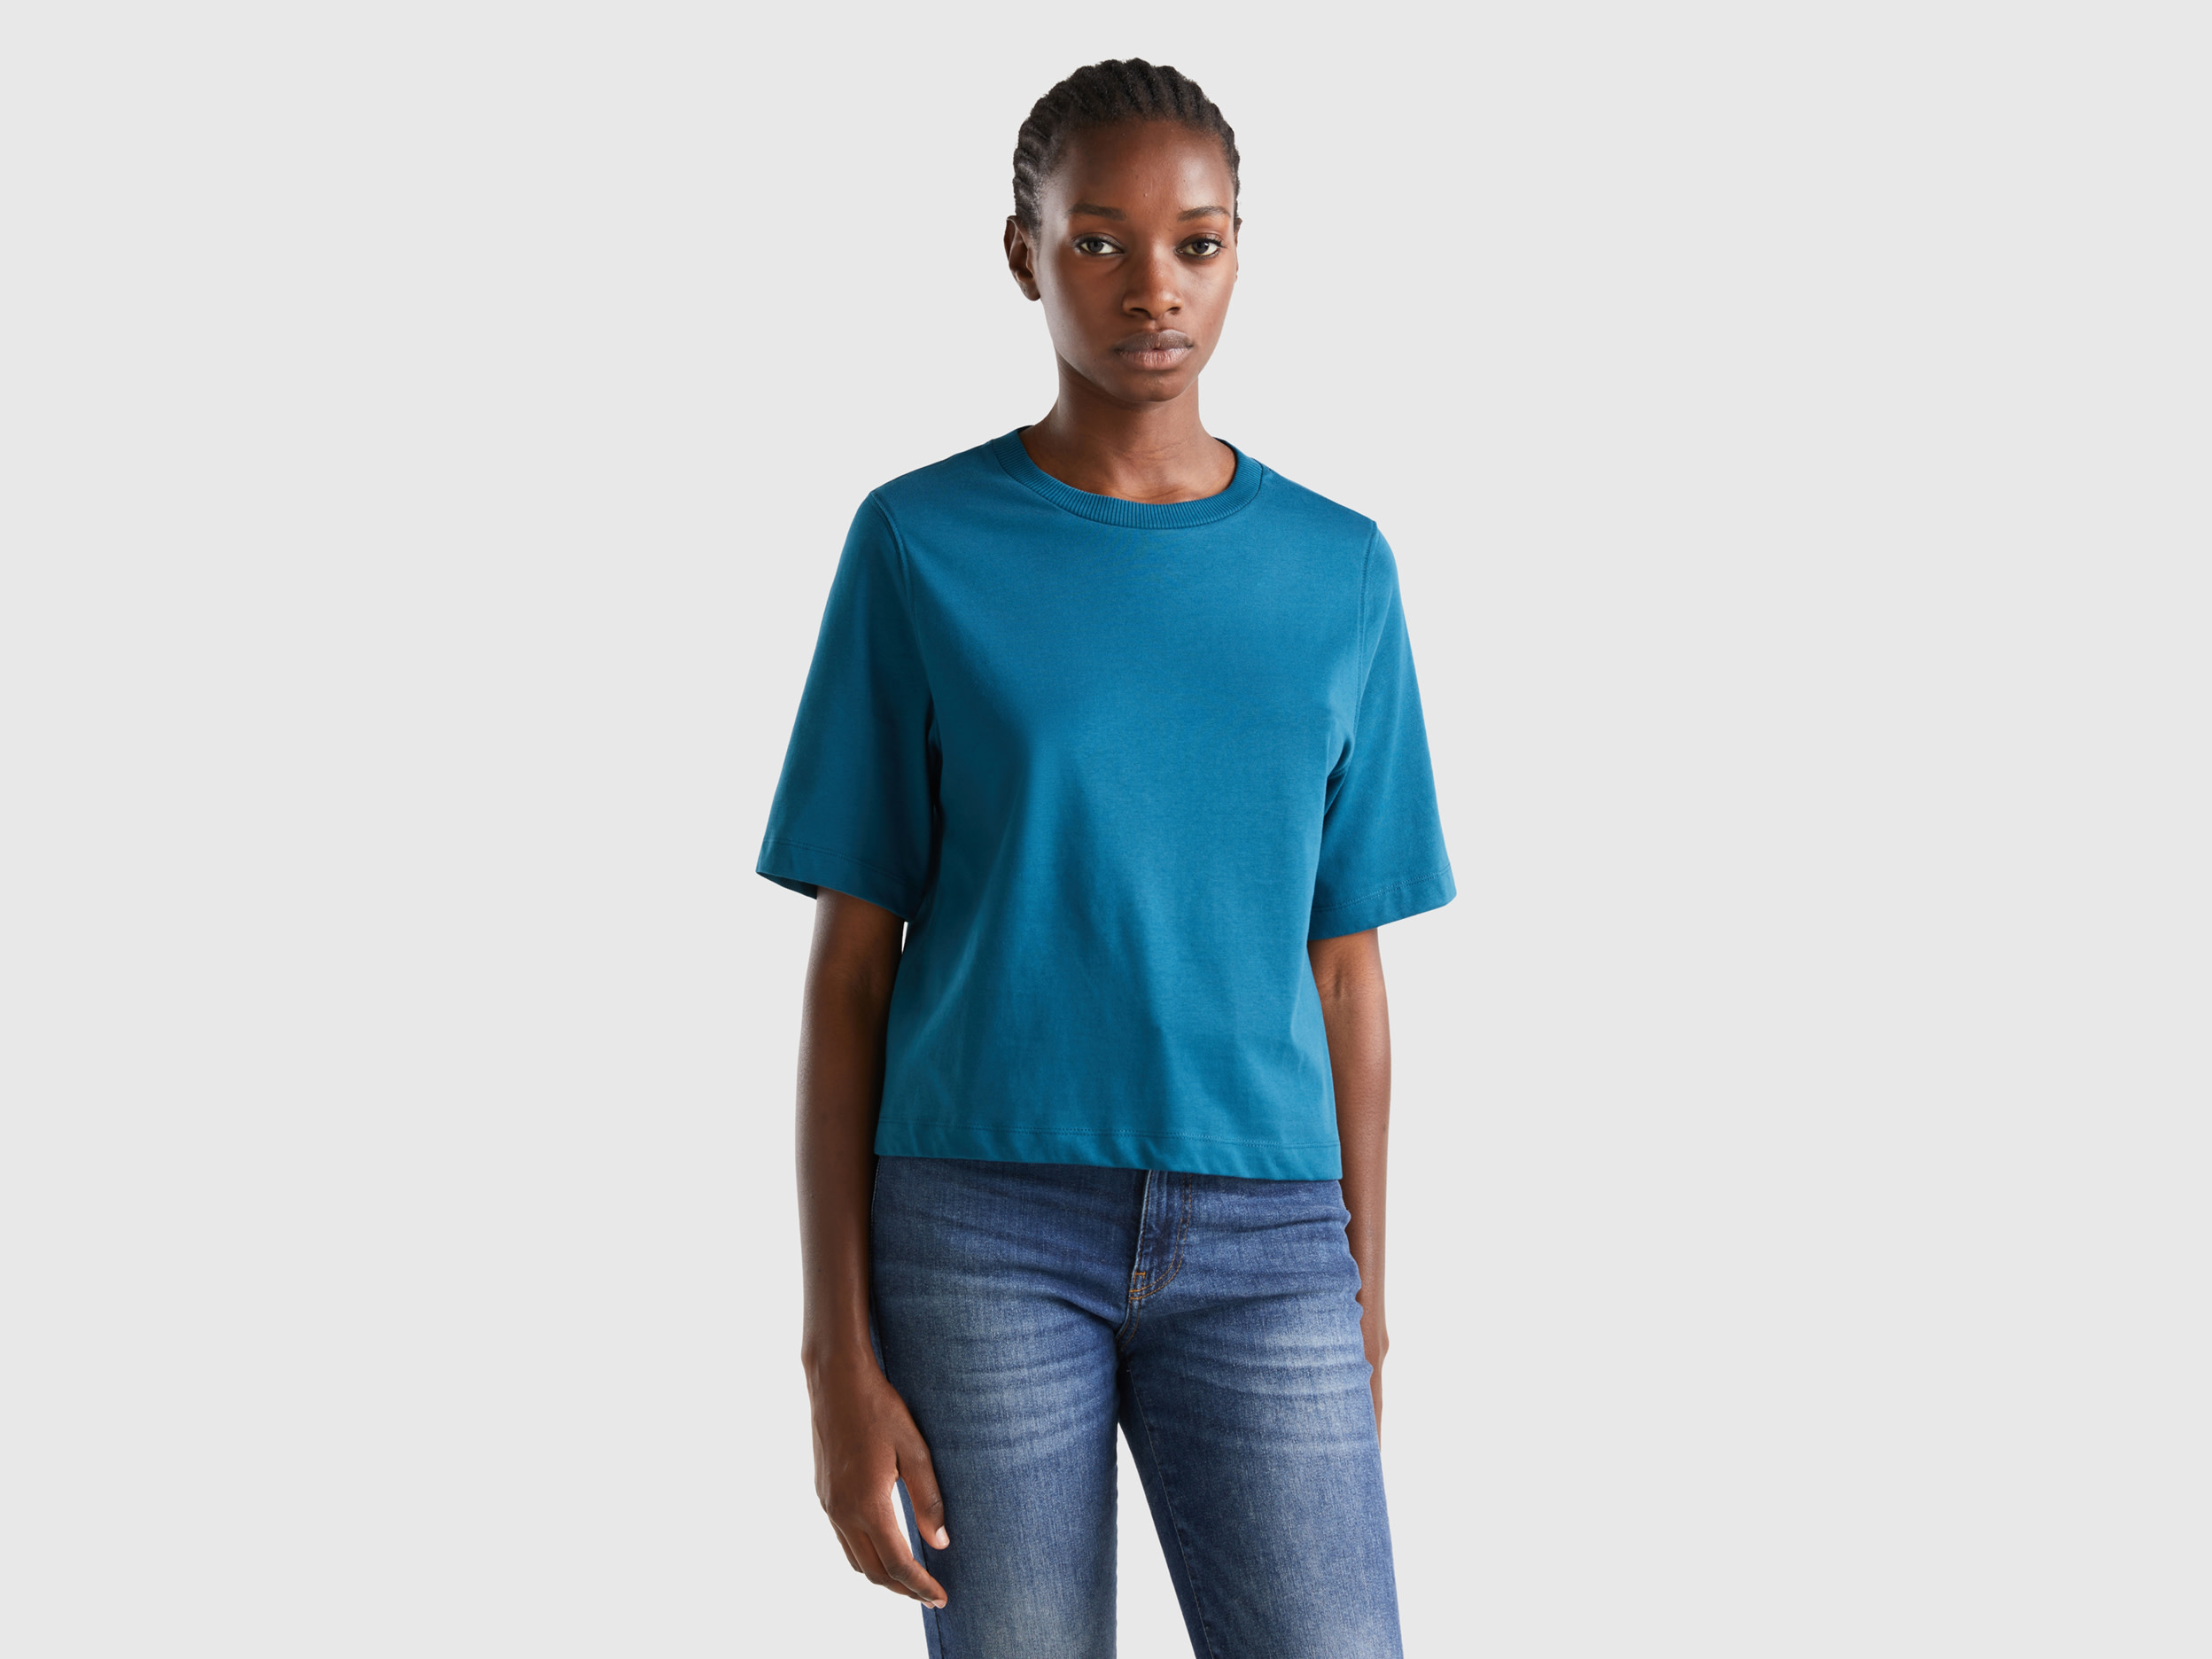 Benetton, 100% Cotton Boxy Fit T-shirt, size XS, Teal, Women